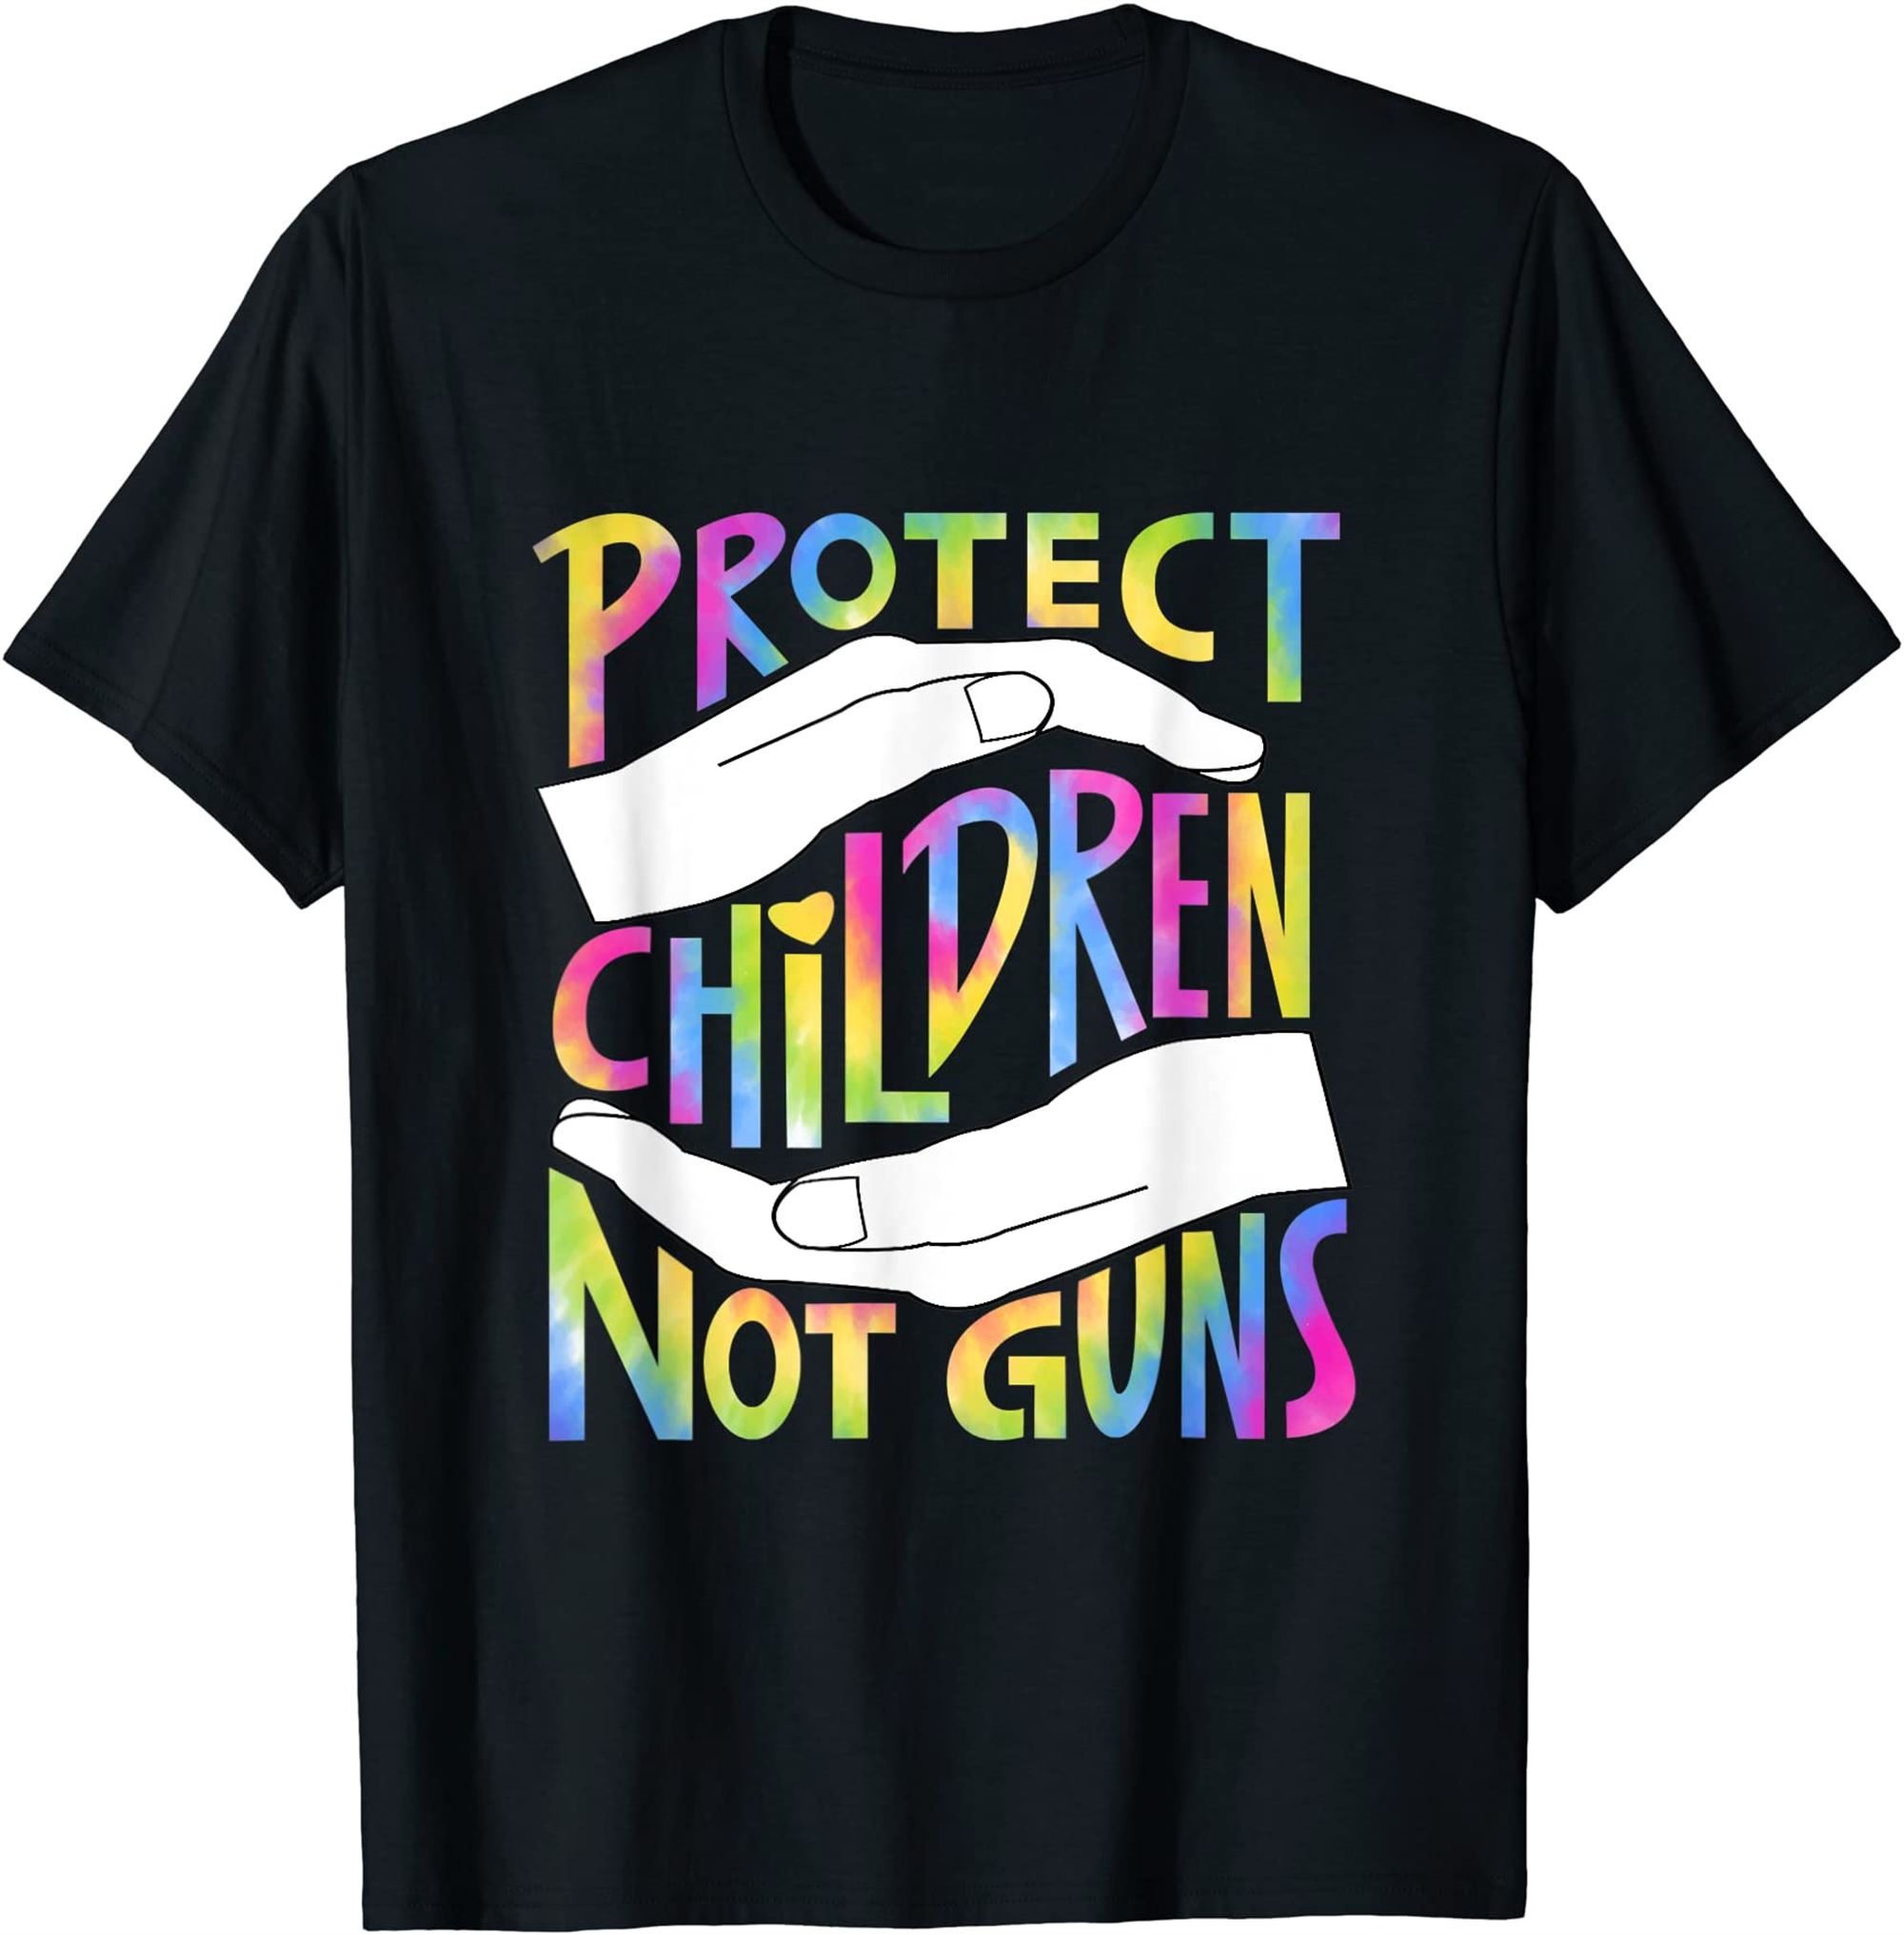 Enough End Gun Violence Stop Gun Protect Children Not Guns T-shirt Size Up To 5xl